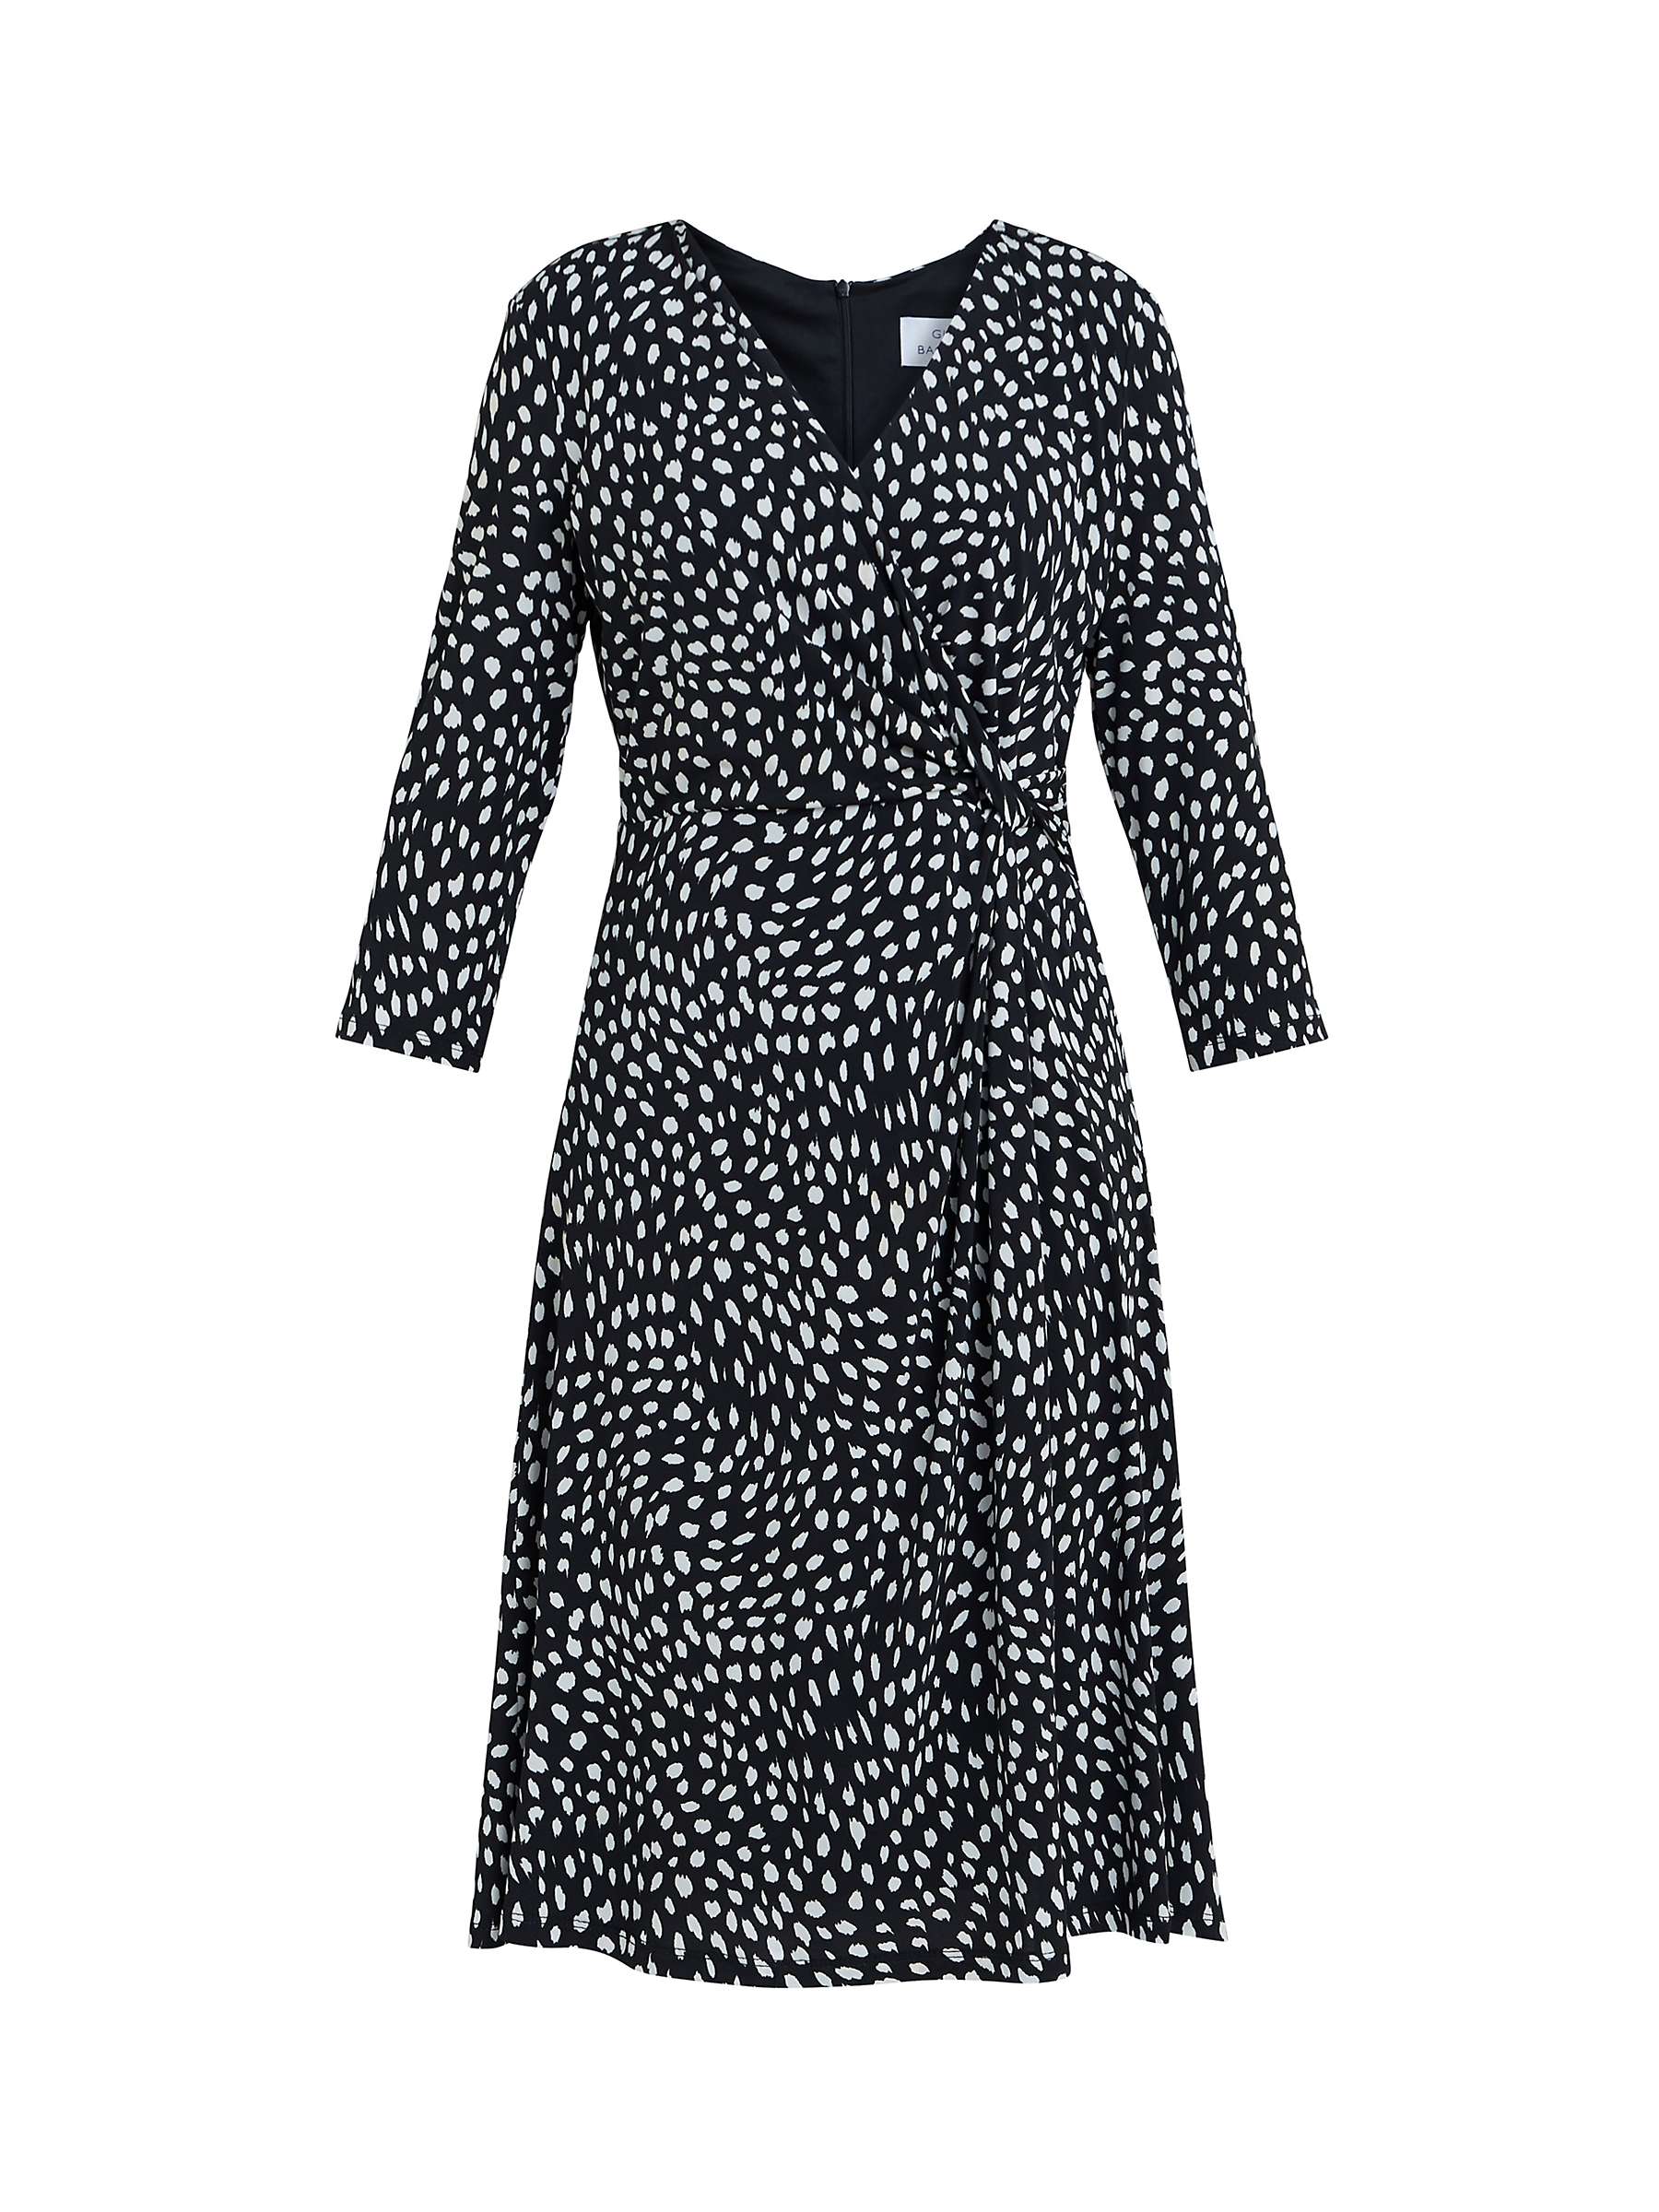 Buy Gina Bacconi Camilla Wrap Dress, Black/Offwhite Online at johnlewis.com